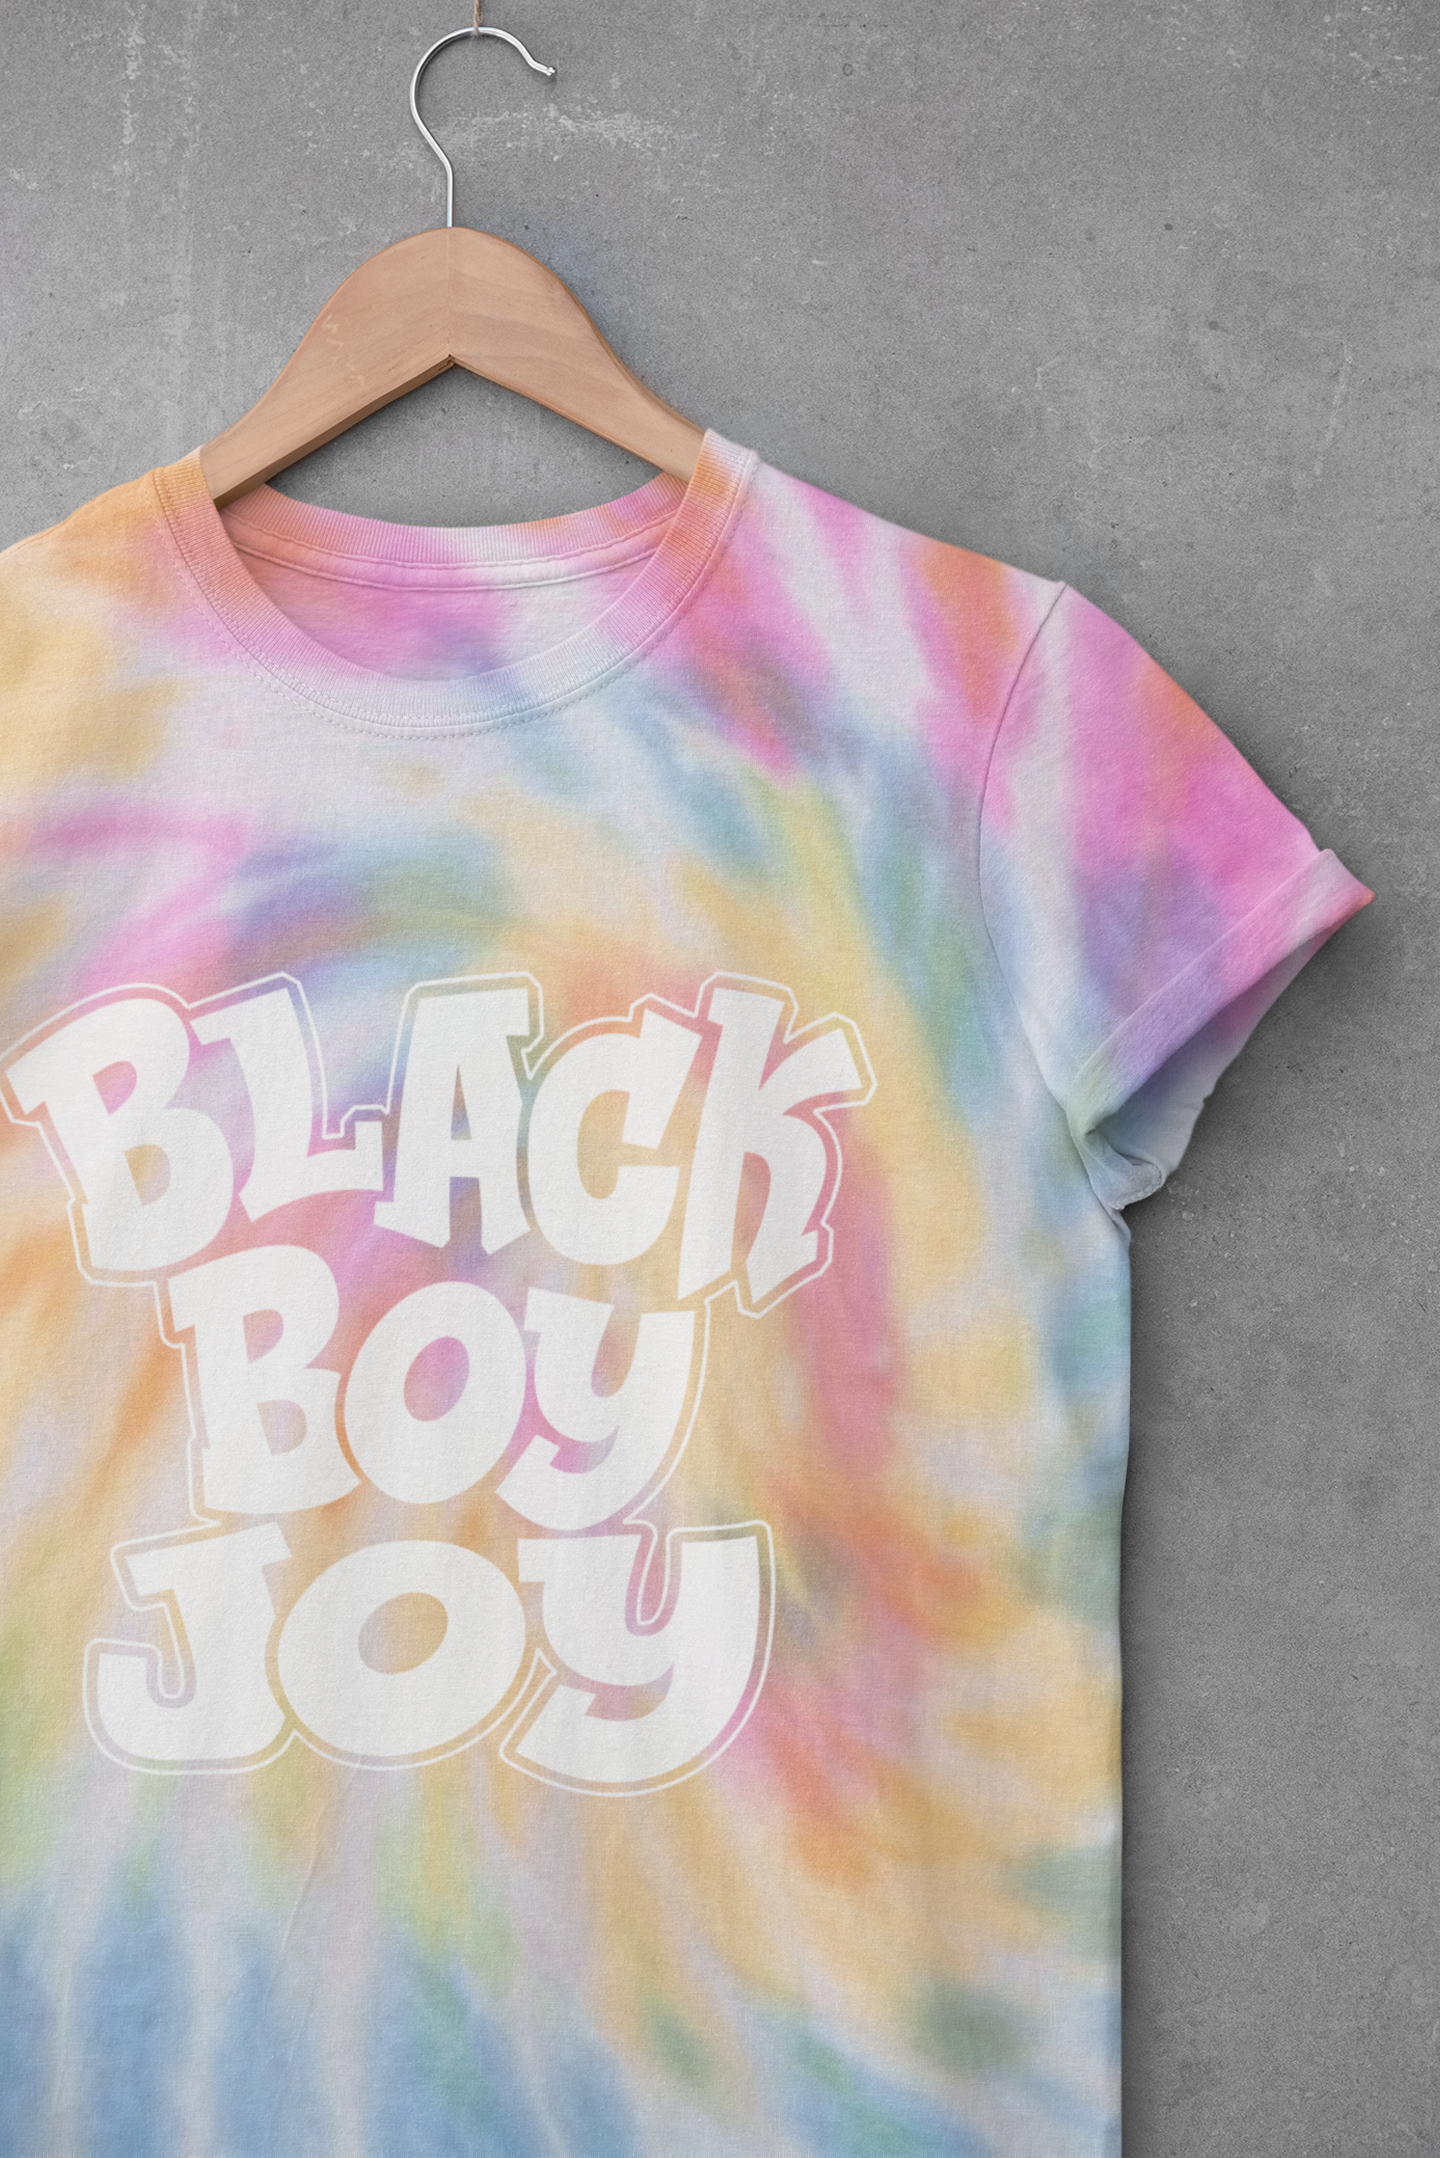 Black Boy Joy Unisex Tie Dye T-Shirt